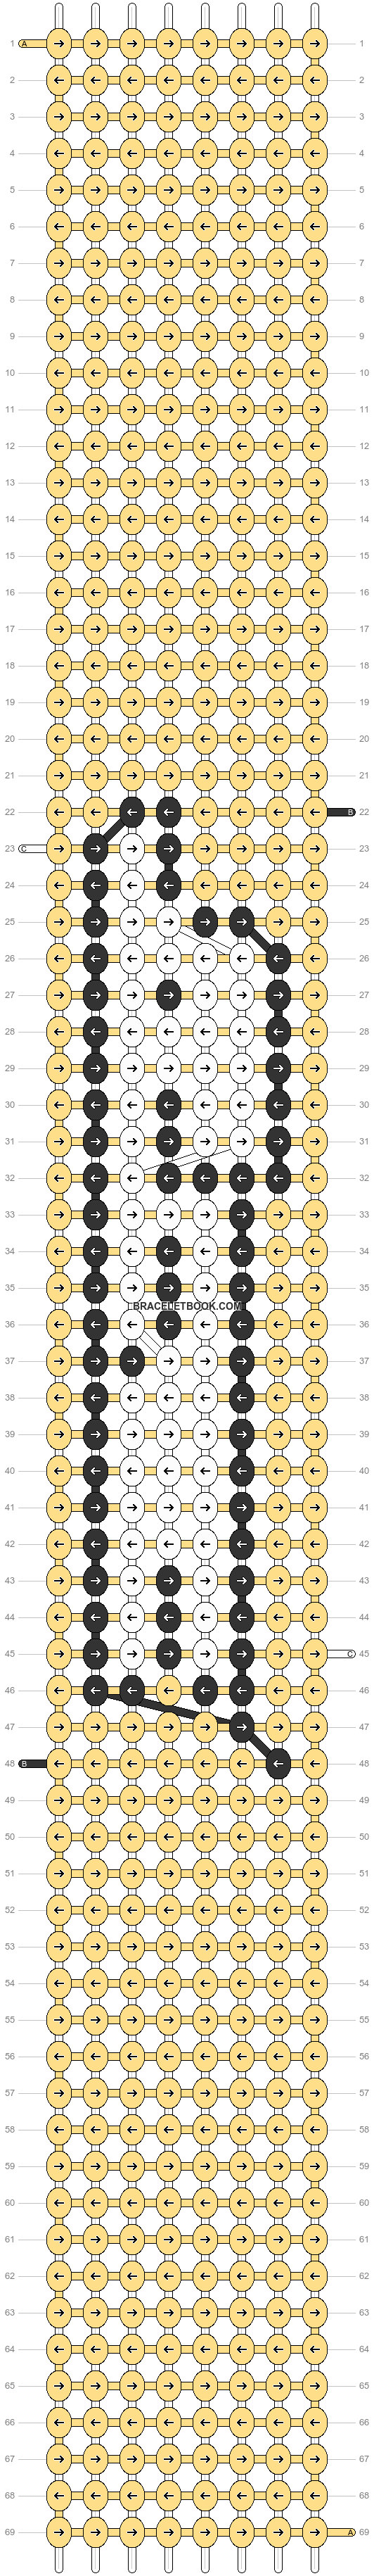 Alpha pattern #36517 variation #326898 pattern